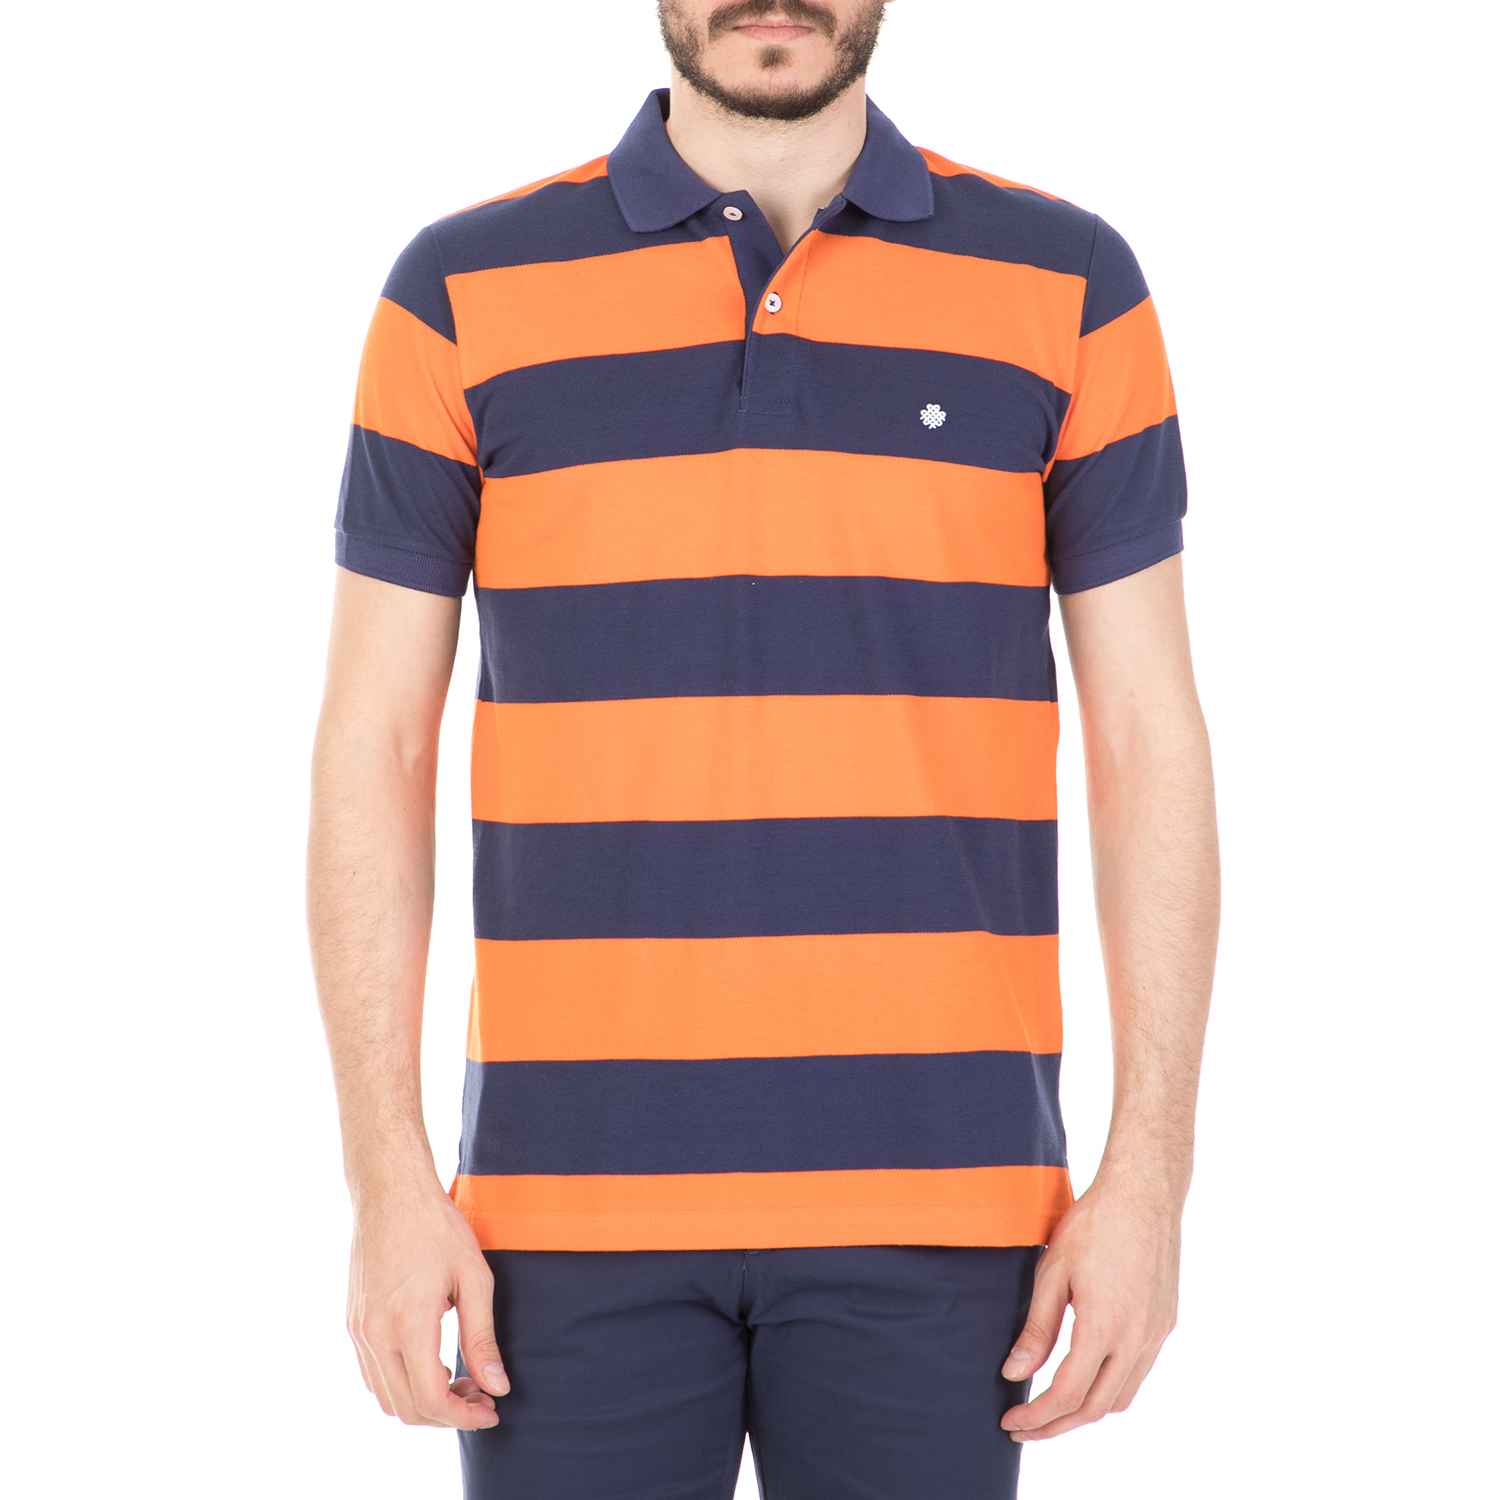 DORS - Ανδρική μπλούζα DORS πορτοκαλί-μπλε